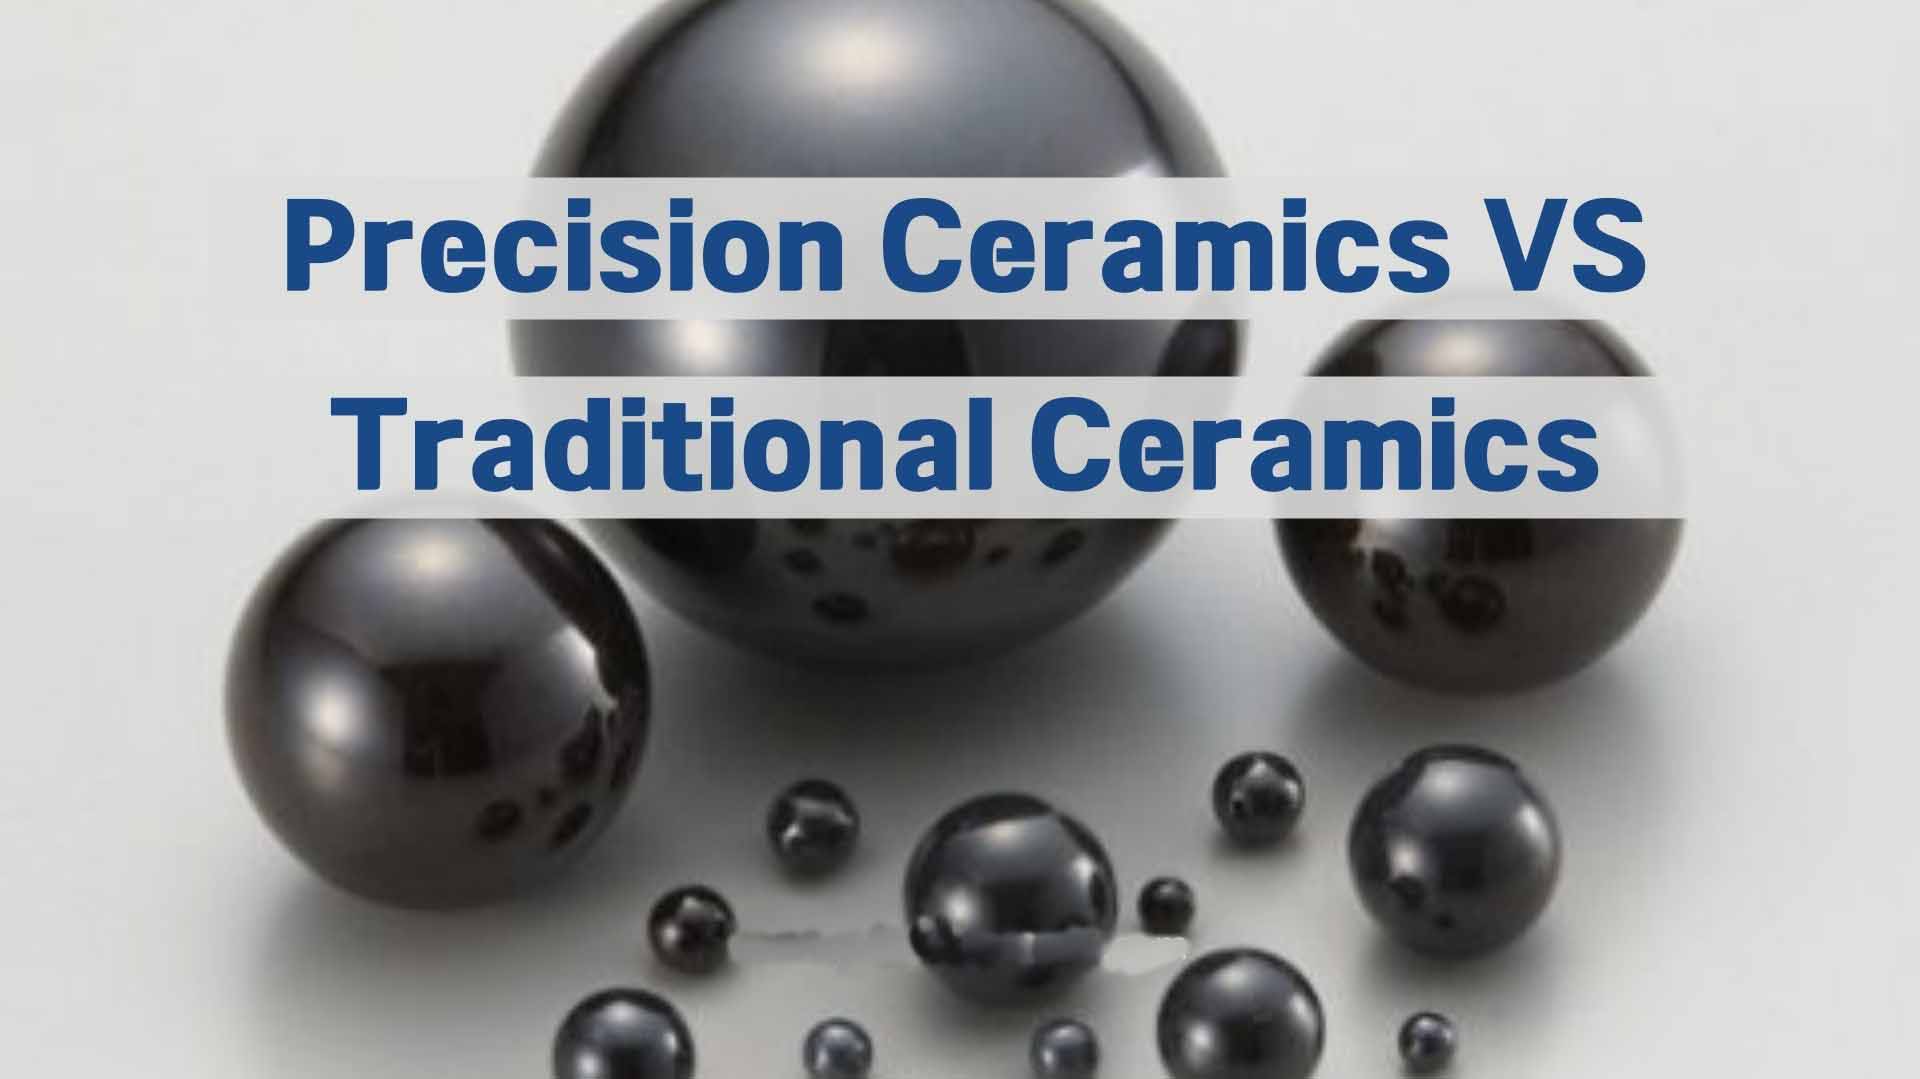 Precision Ceramics VS Traditional Ceramics